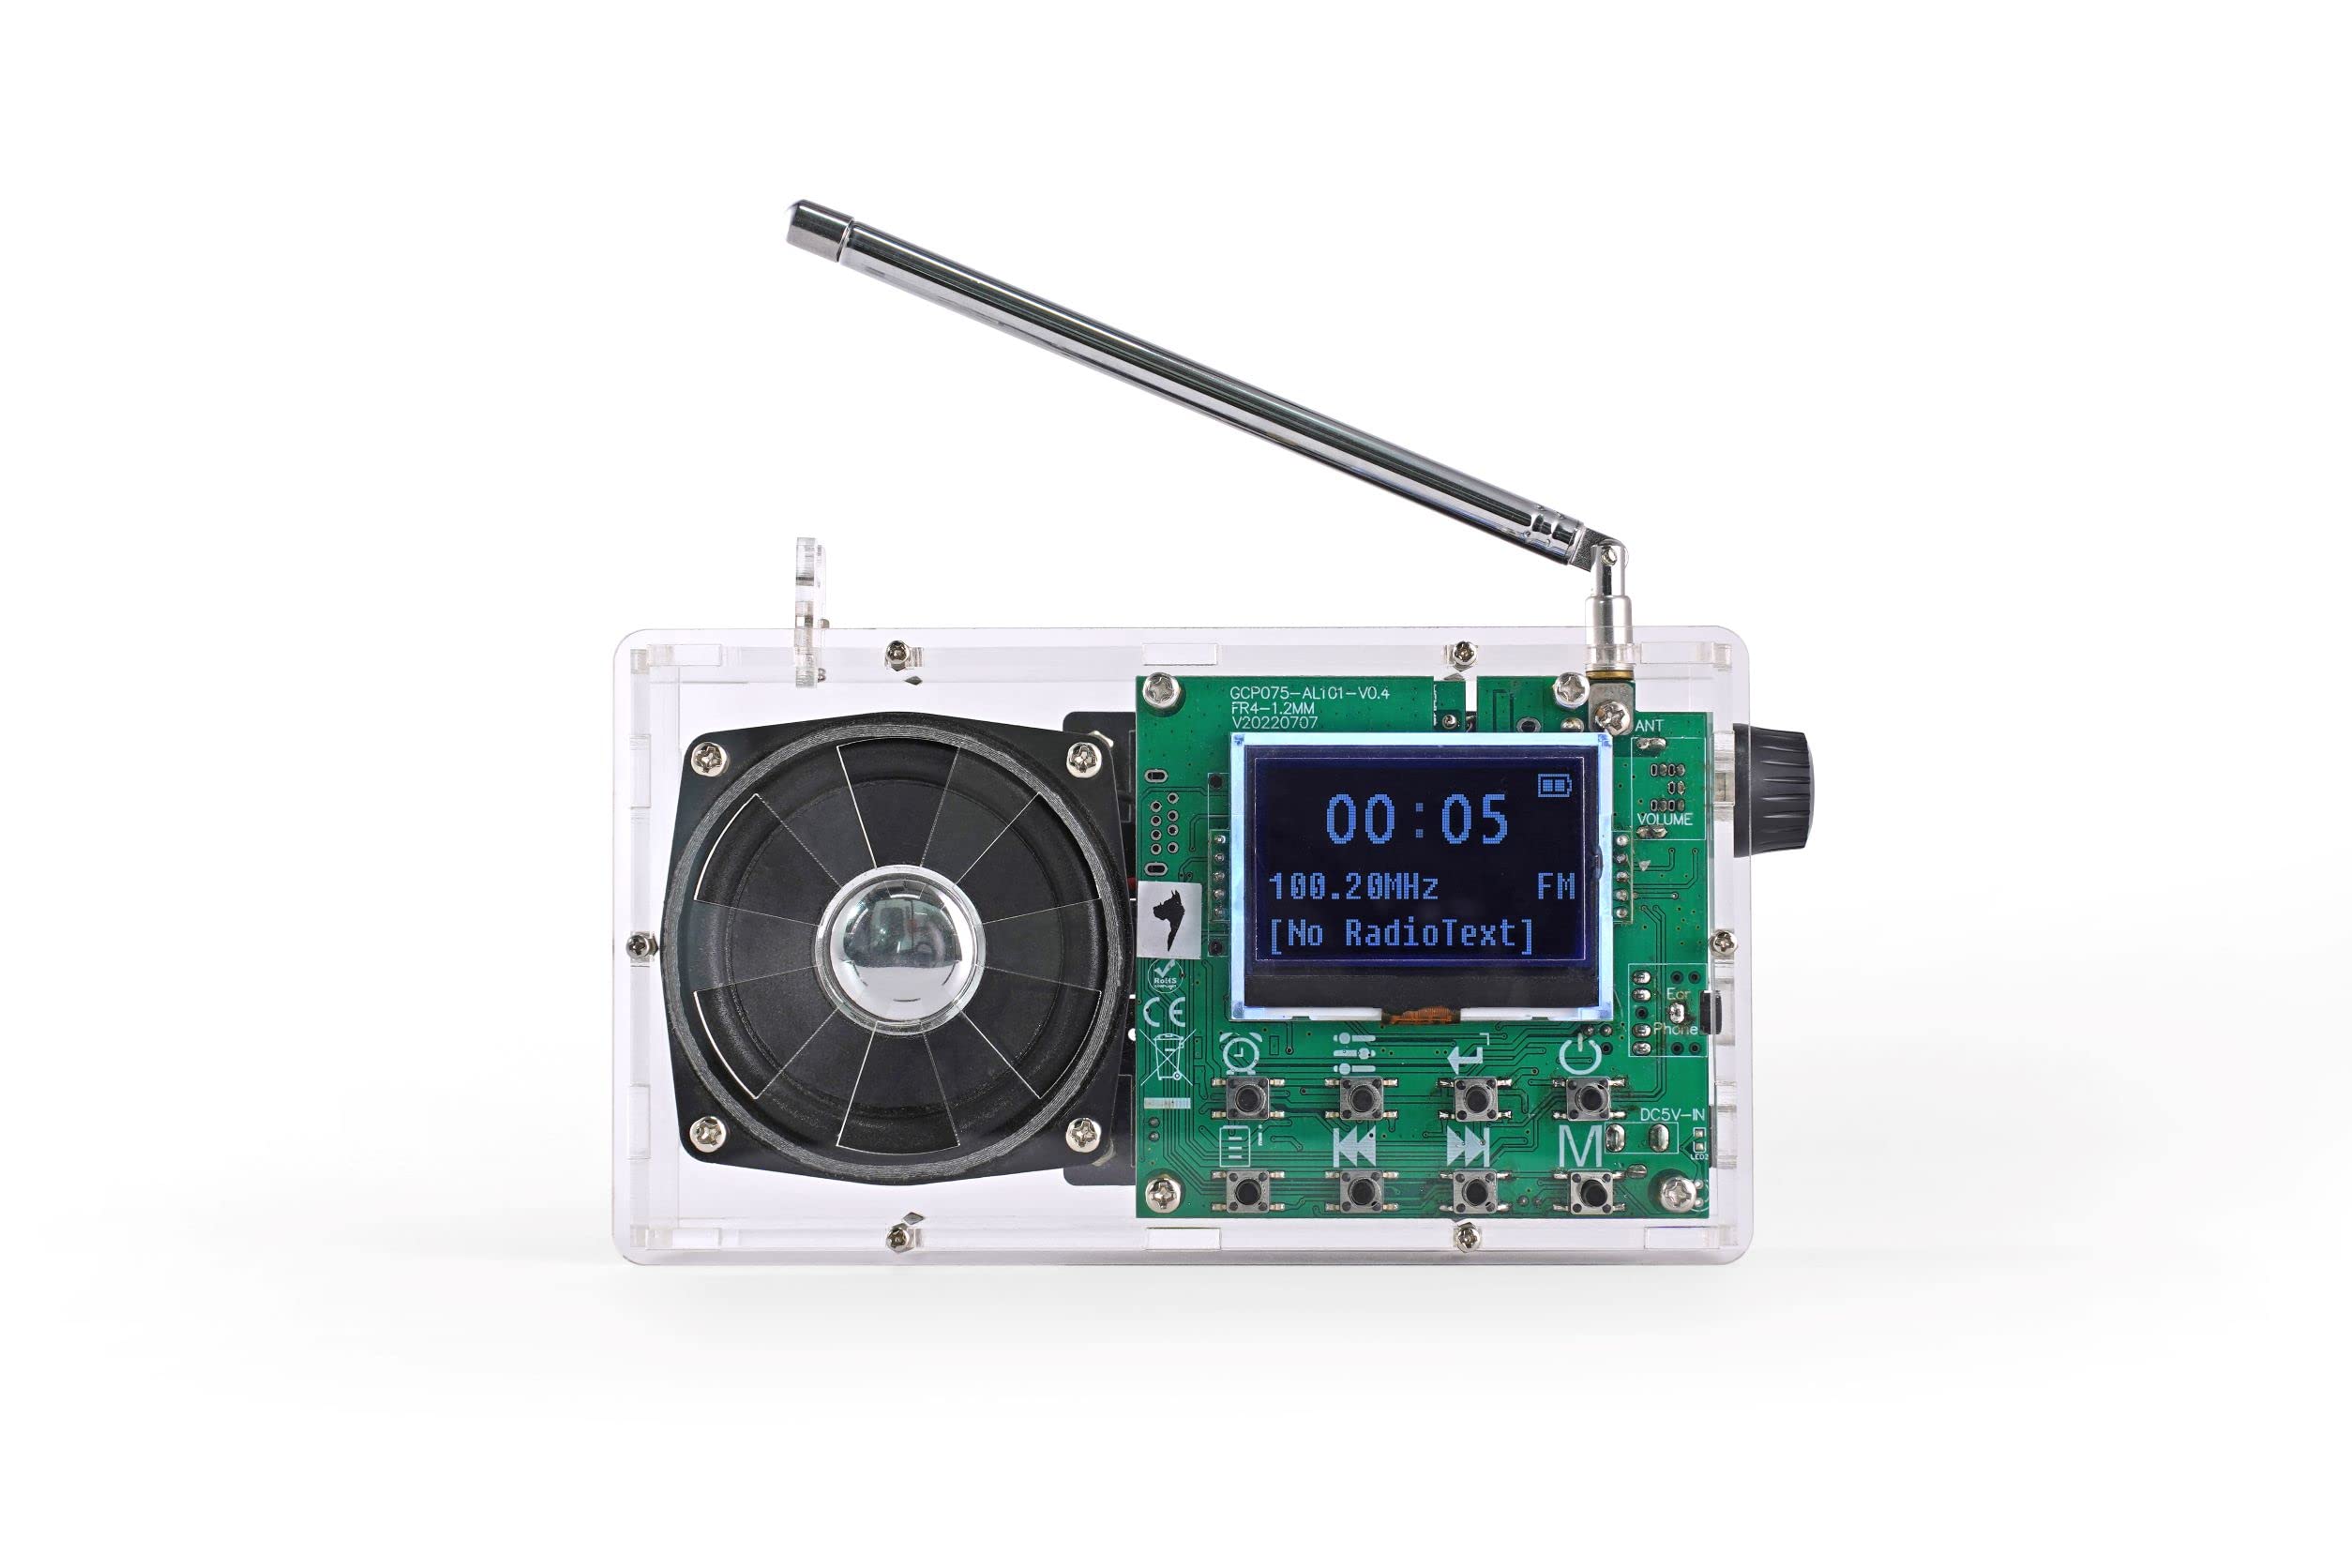 AOVOTO ALK101 FM/DAB-Radio Do It Yourself (DIY)-Kits mit transparentem Acrylgehäuse, DIY DAB+/FM-Sets mit Alarmmodus und LCD-Display, einfach für Anfänger